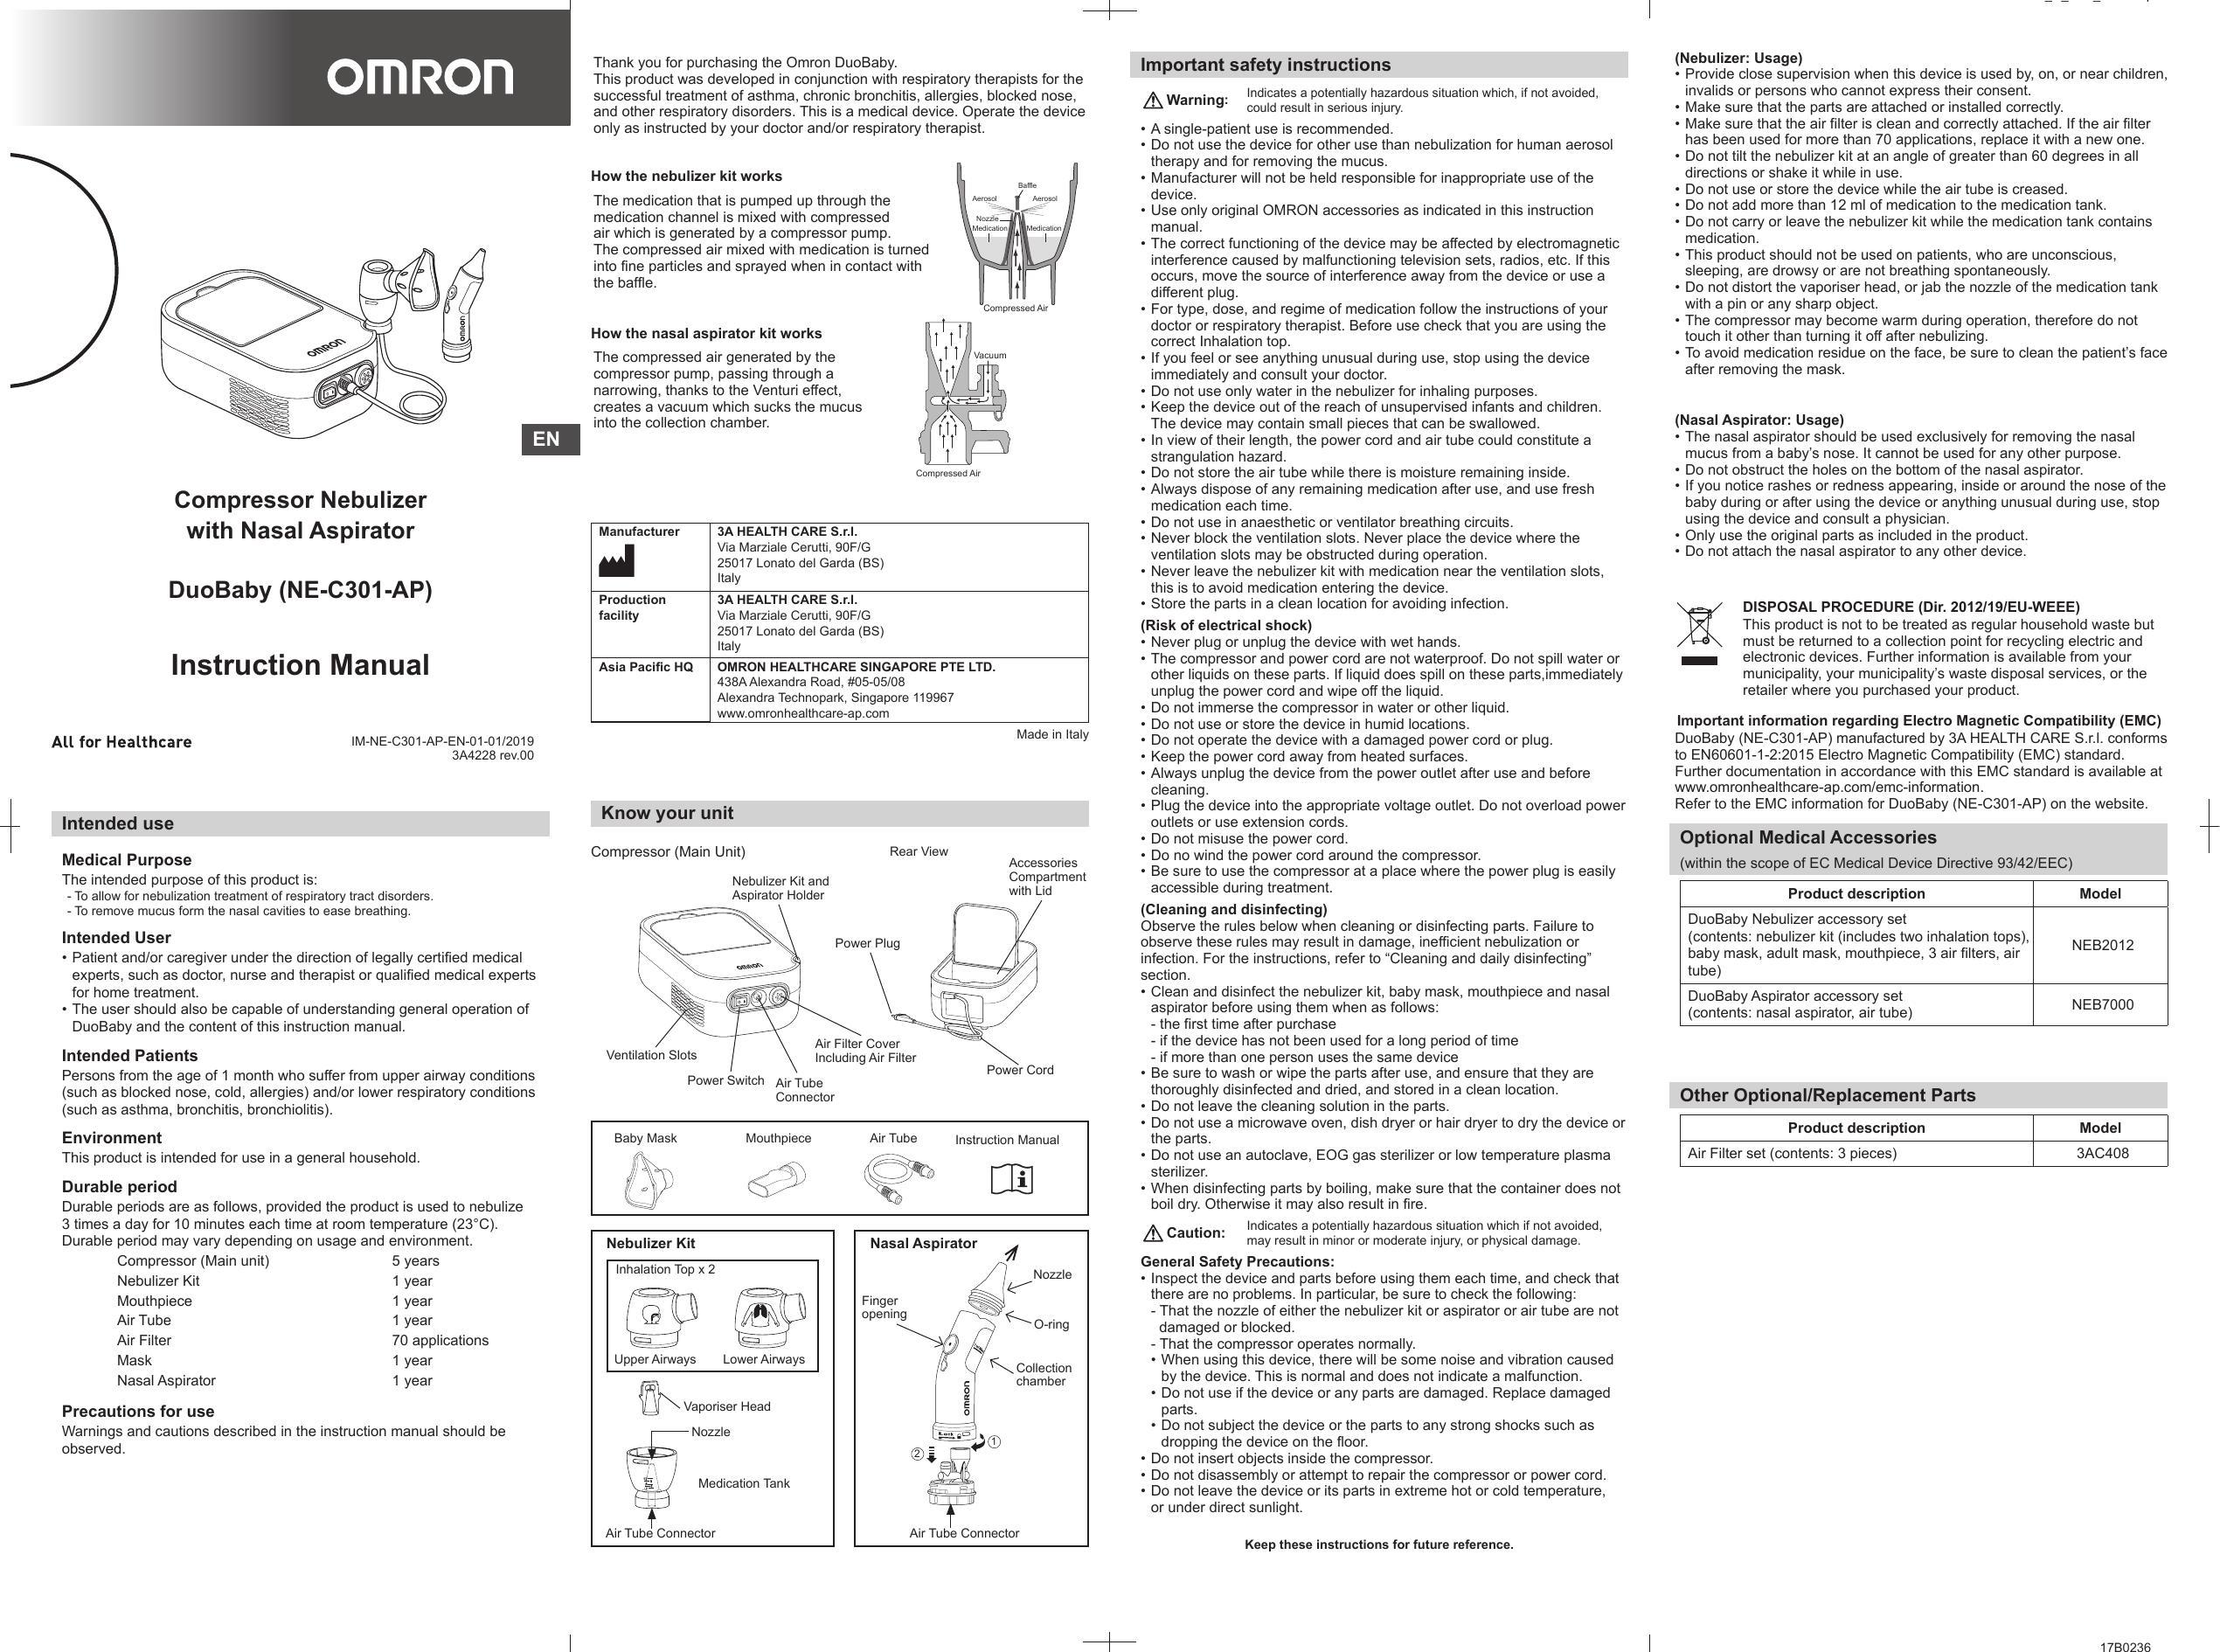 instruction-manual-for-omron-duobaby-compressor-nebulizer-with-nasal-aspirator-ne-c301-ap.pdf